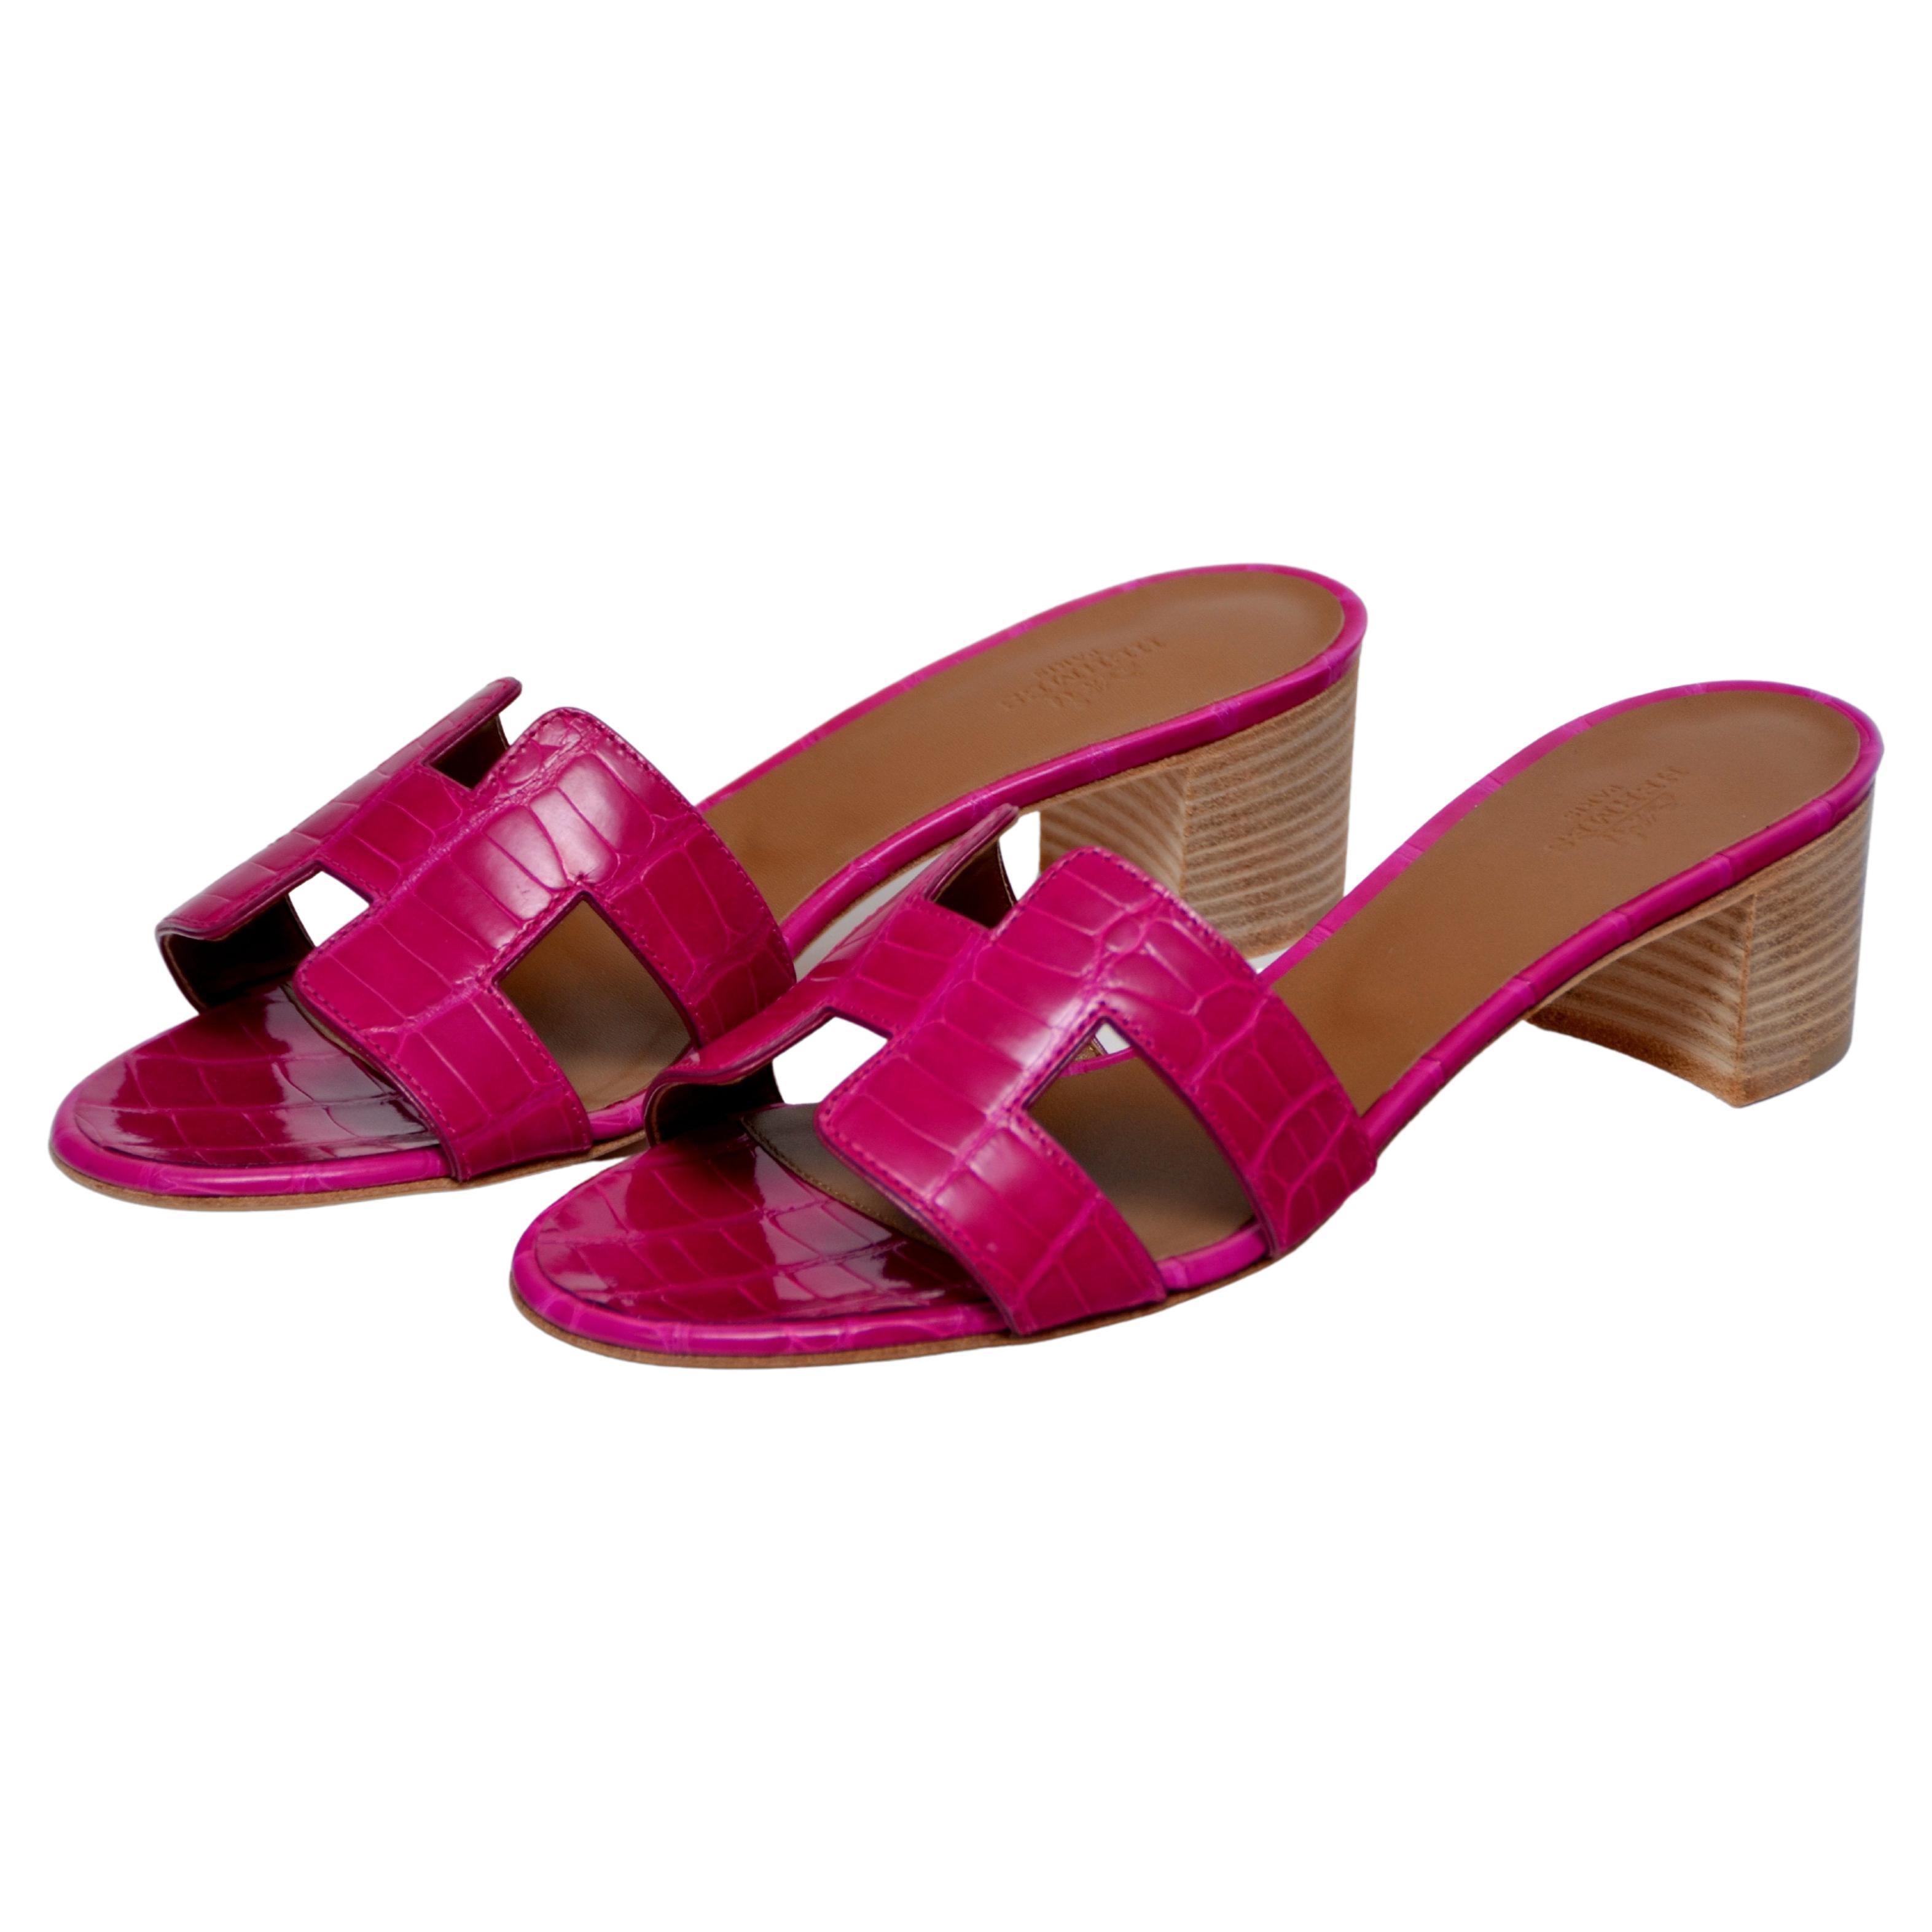 Hermes Glänzende Krokodil Sandalen Schuhe
Neu nie getragen
Farbe:Rose Sheherazade Farbe
Größe 39
ENDVERKAUF